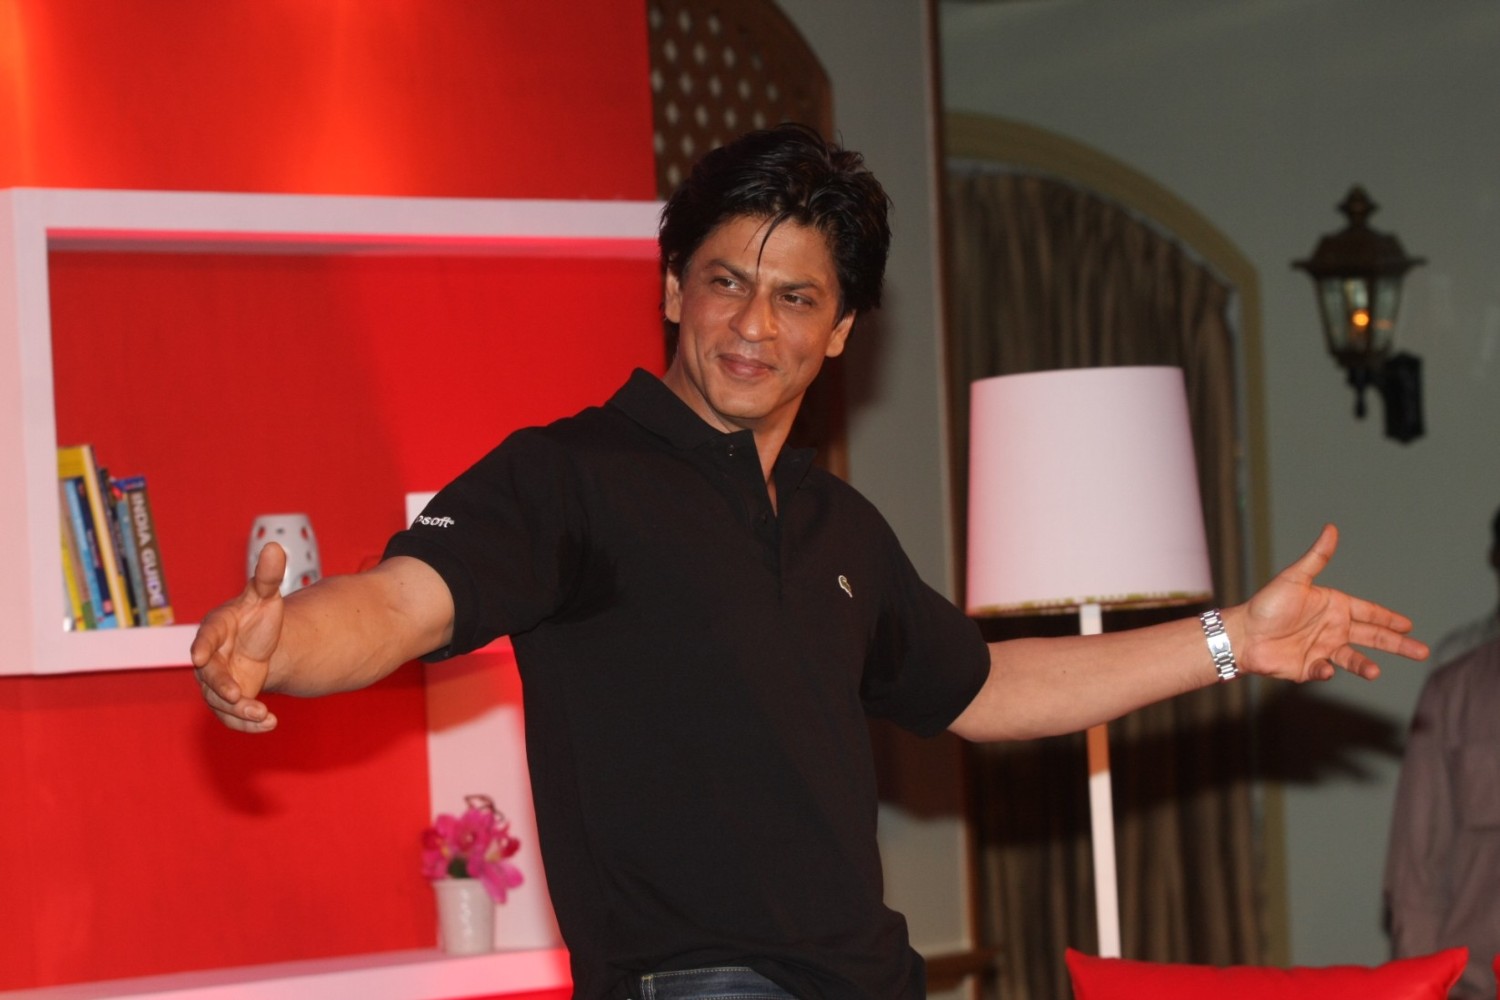 Shah Rukh Khan wears black suit for Delhi event, fans call him 'so dashing'  | Bollywood - Hindustan Times